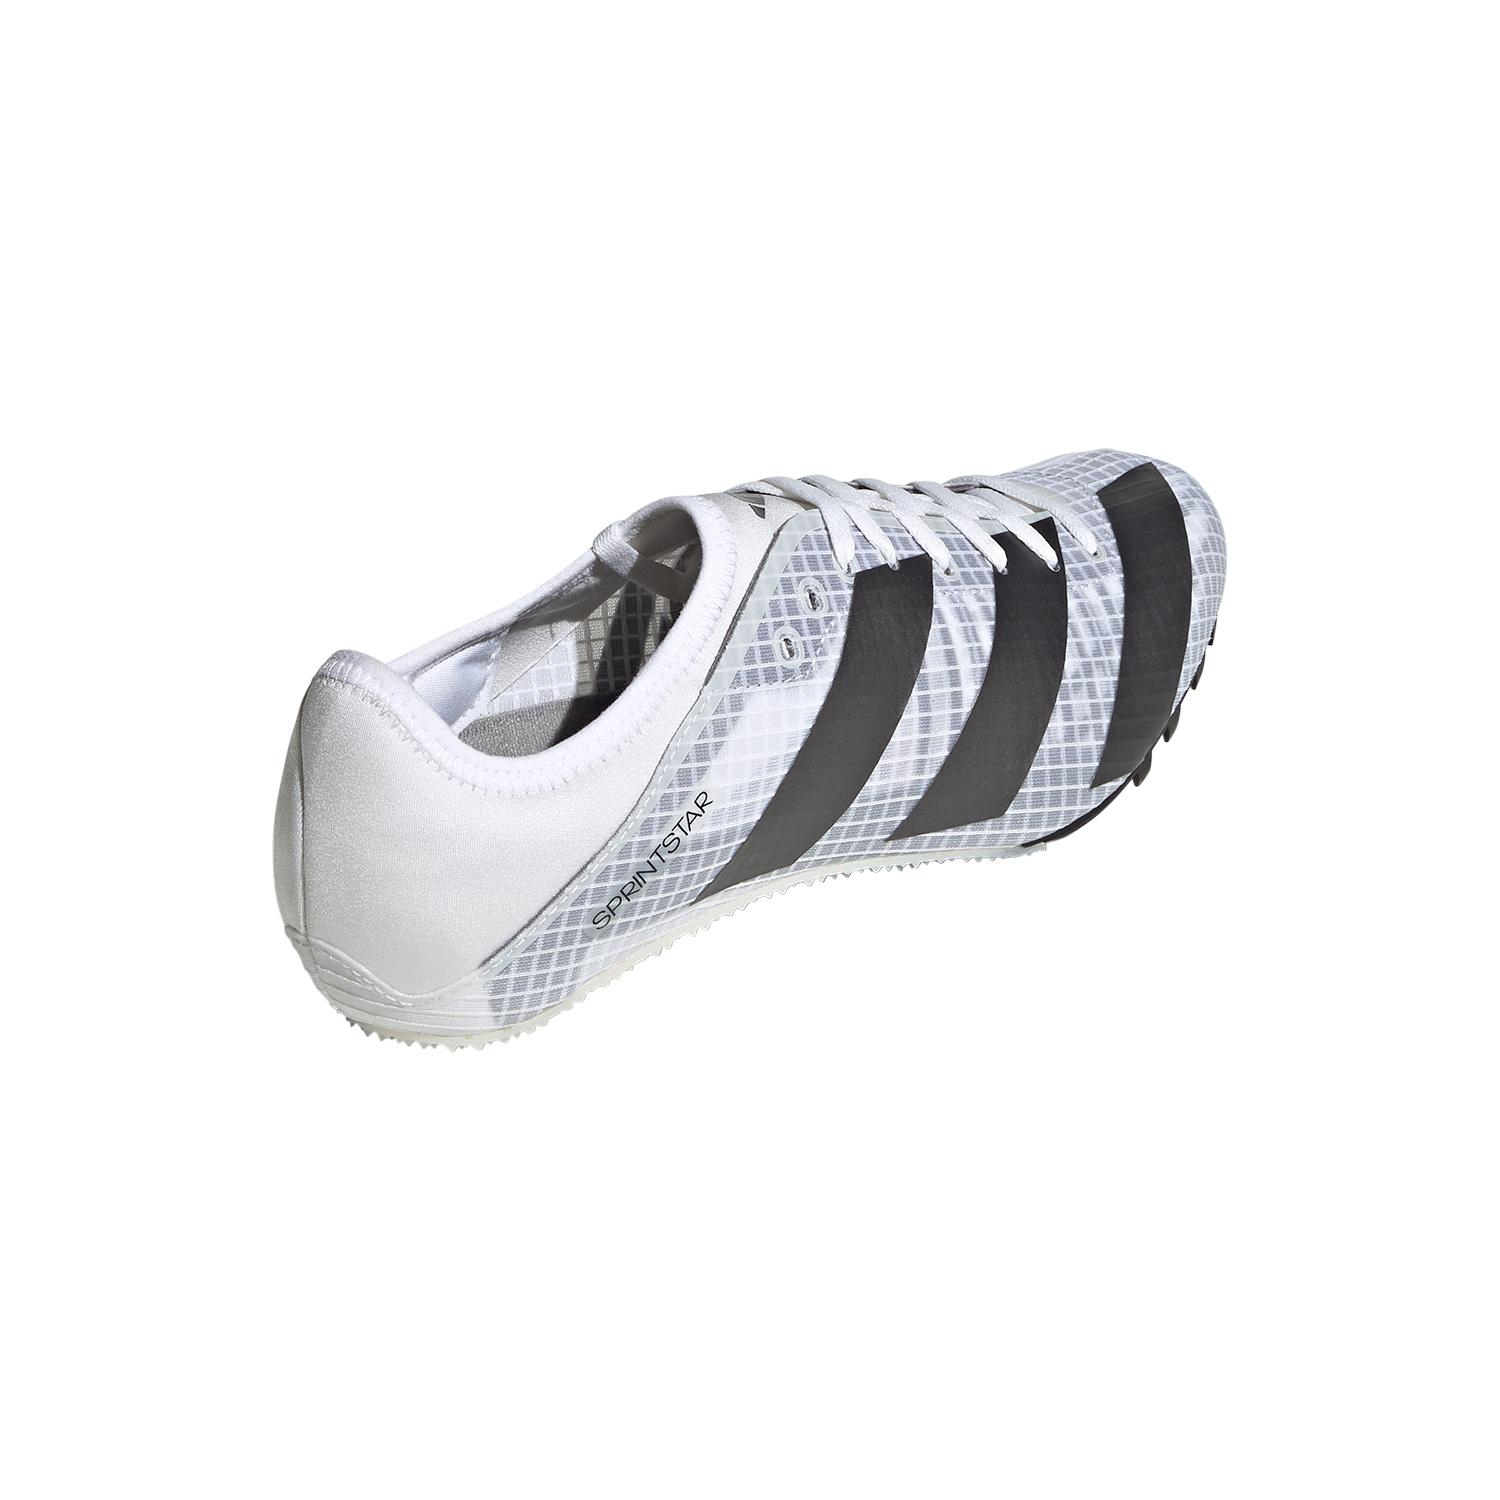 Adidas Sprintstar - FTW White/Night Metallic/Core Black